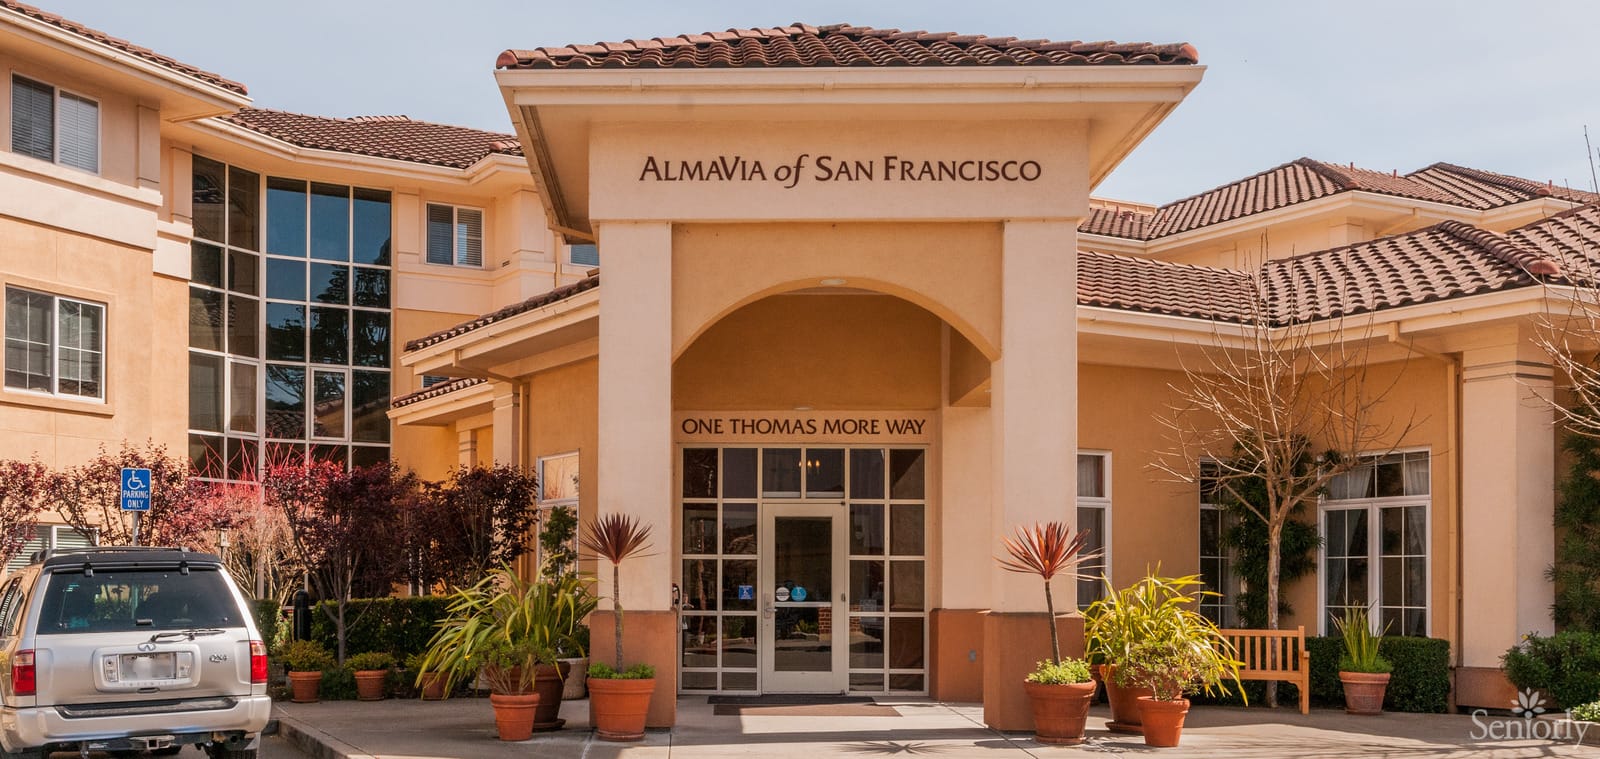 AlmaVia of San Francisco